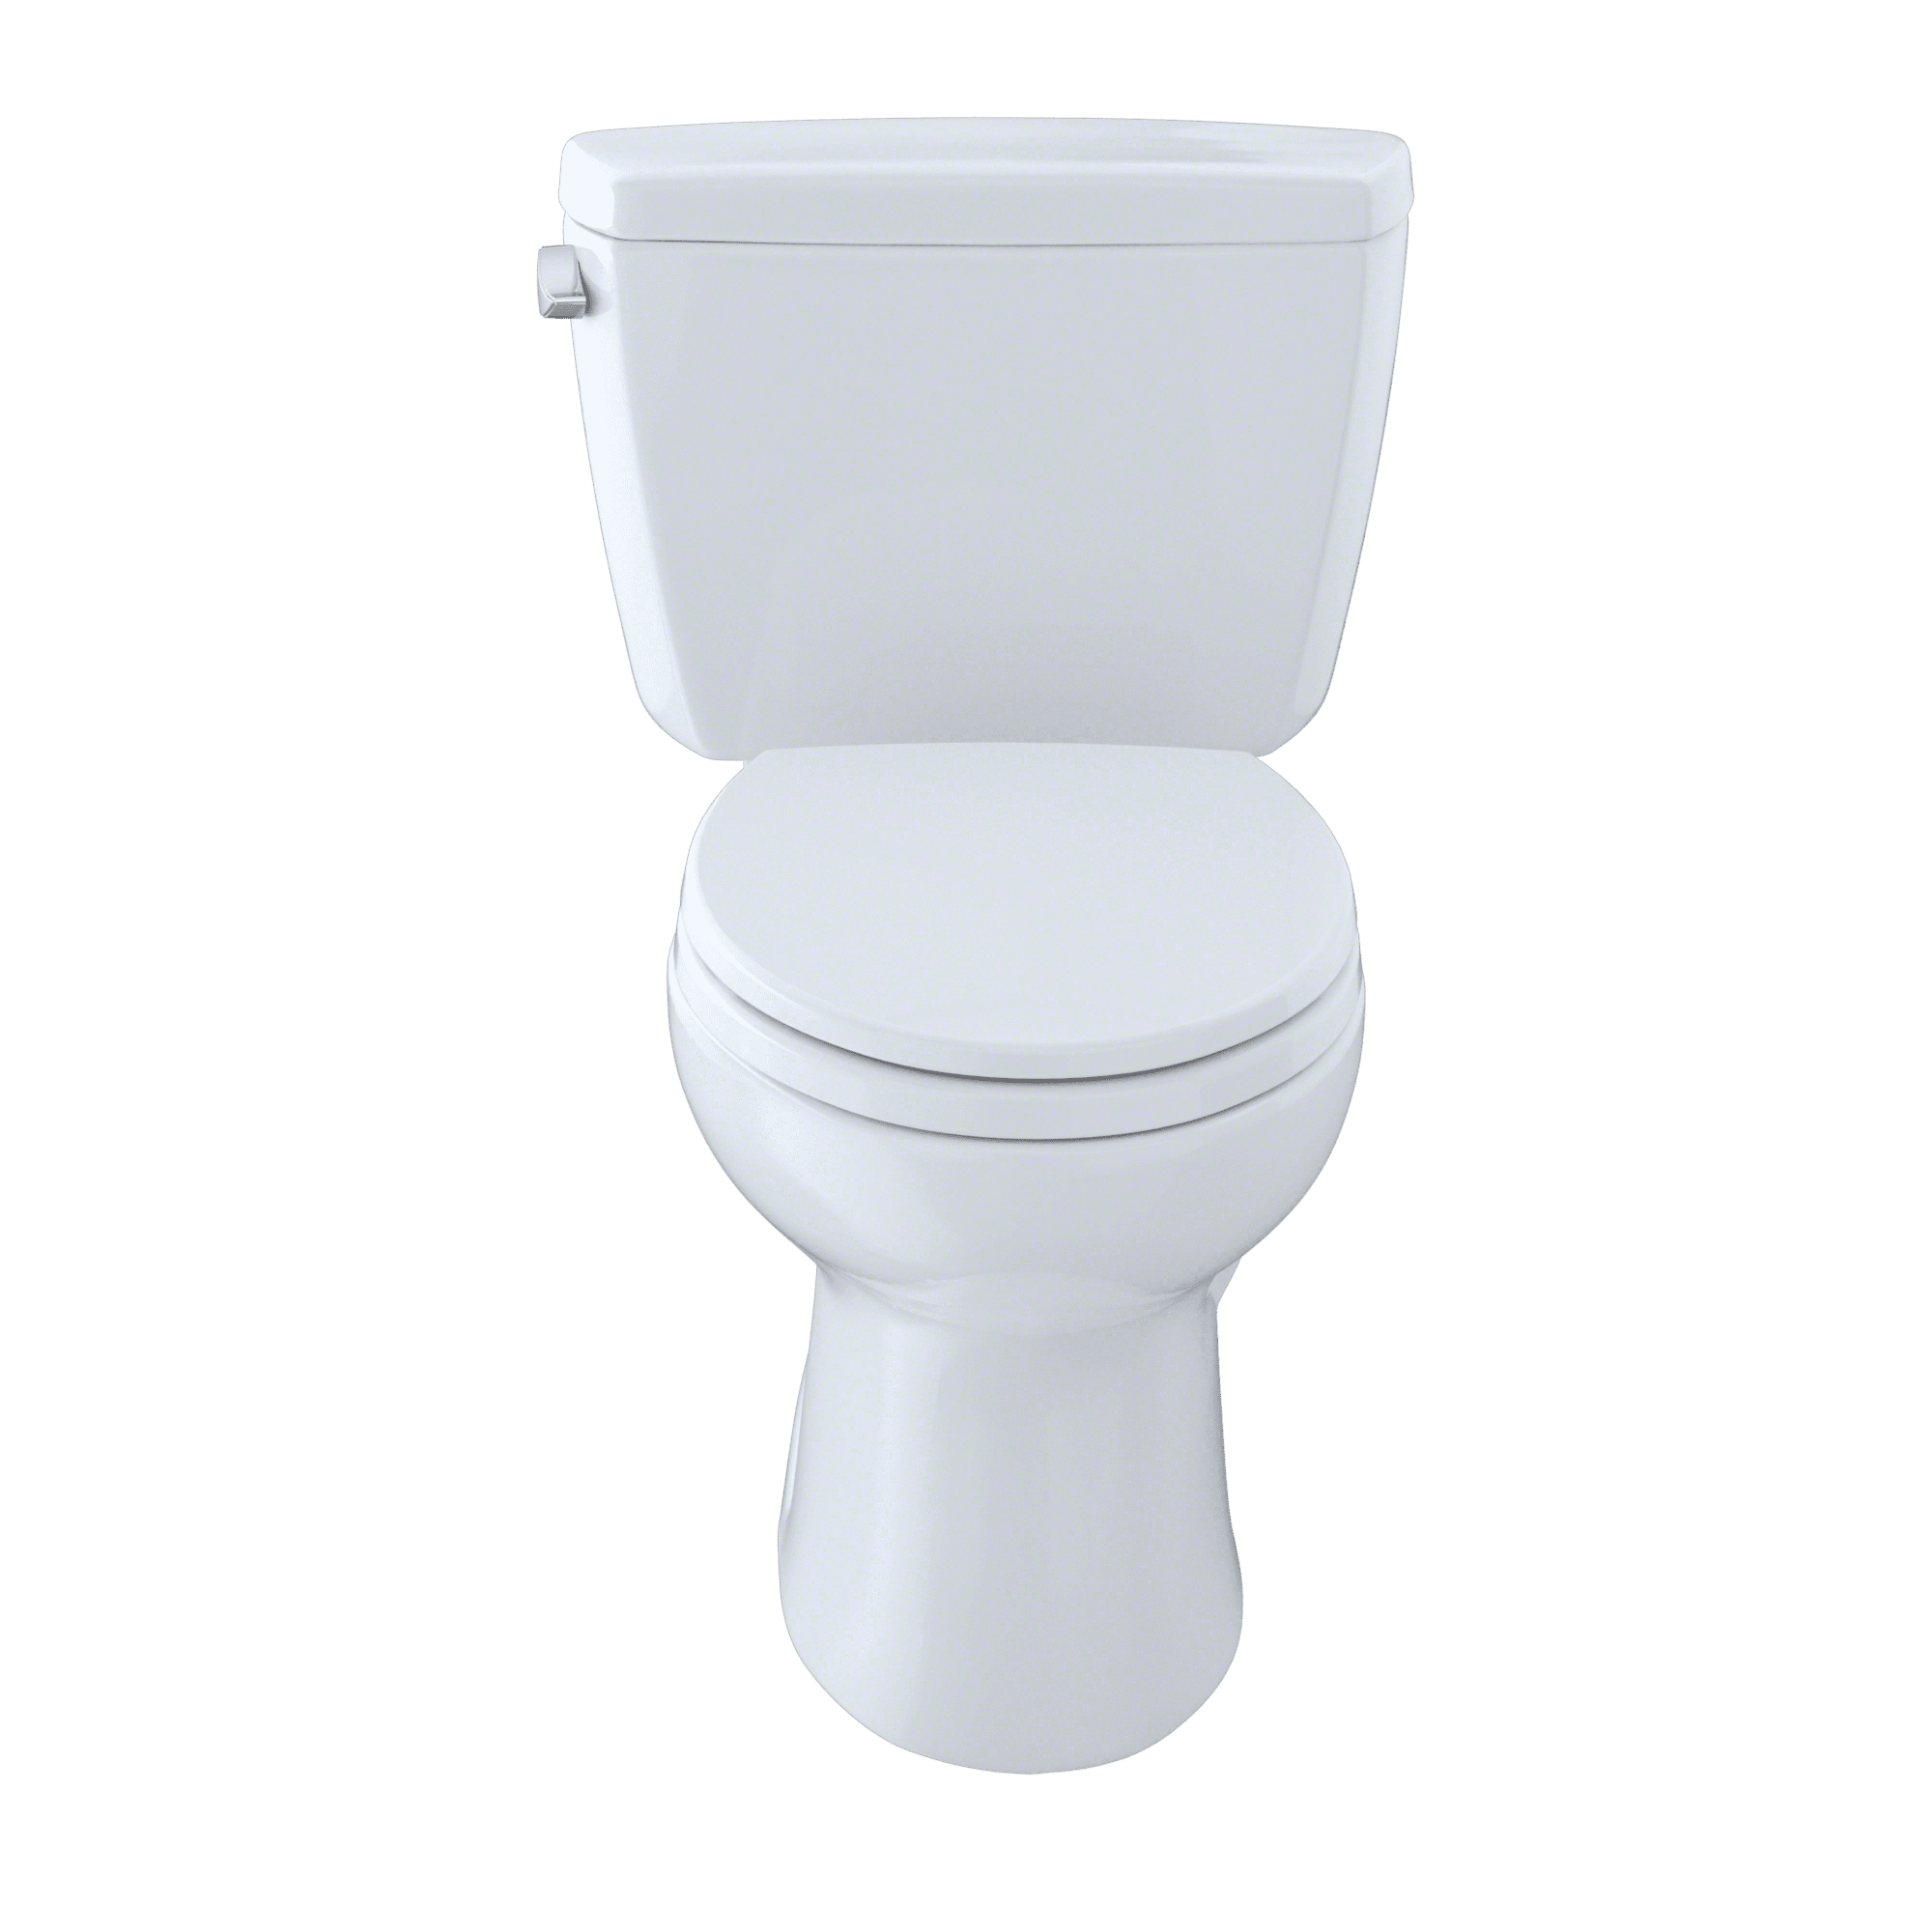 how to identify toto toilet model